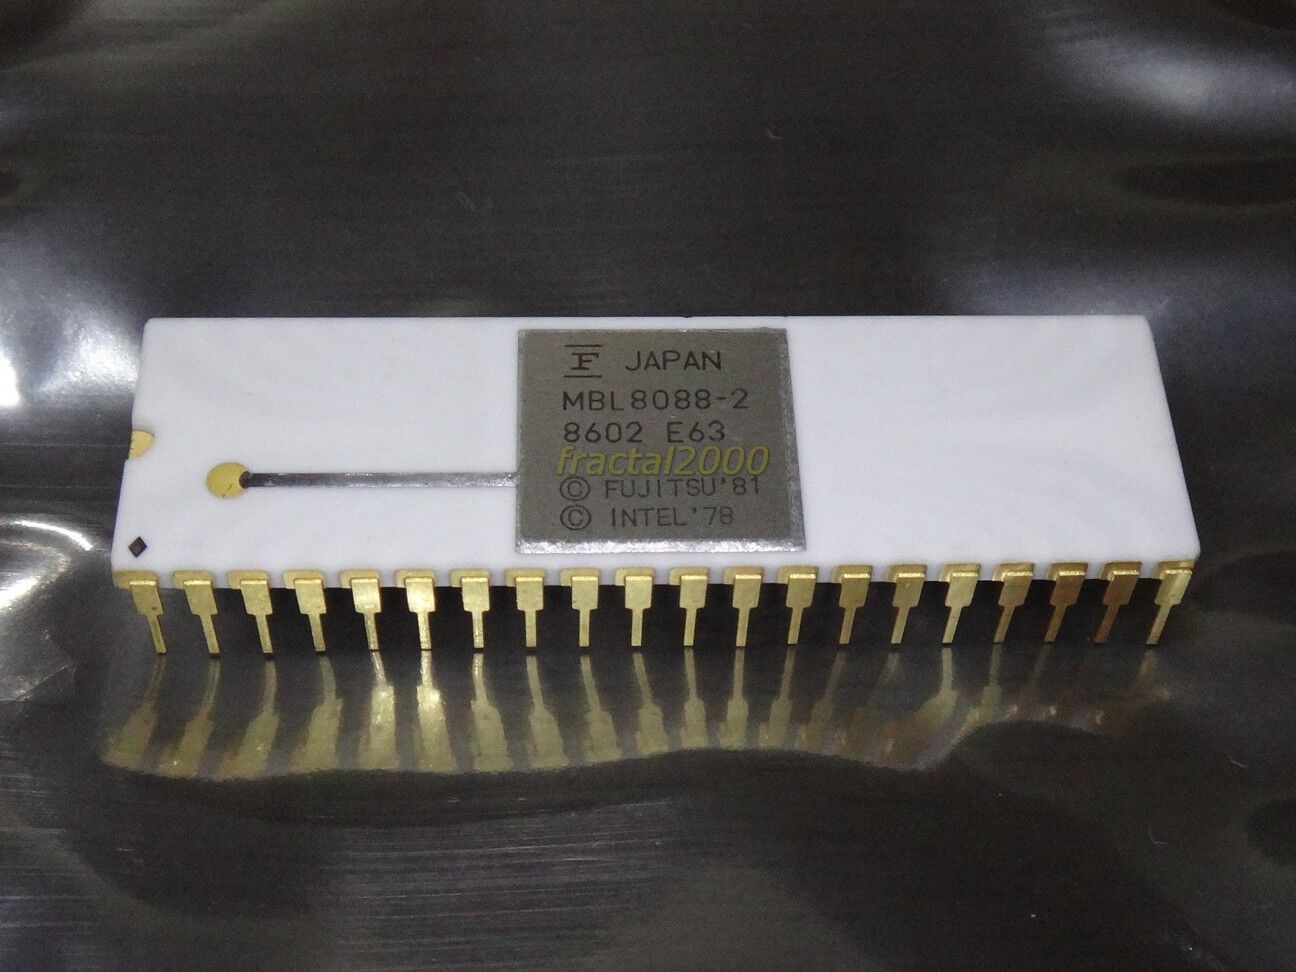 NEW MBL 8088-2 FUJITSU 8Mhz CERAMIC GOLD PLATED CPU D8088 P8088 PC XT COMPATIBLE